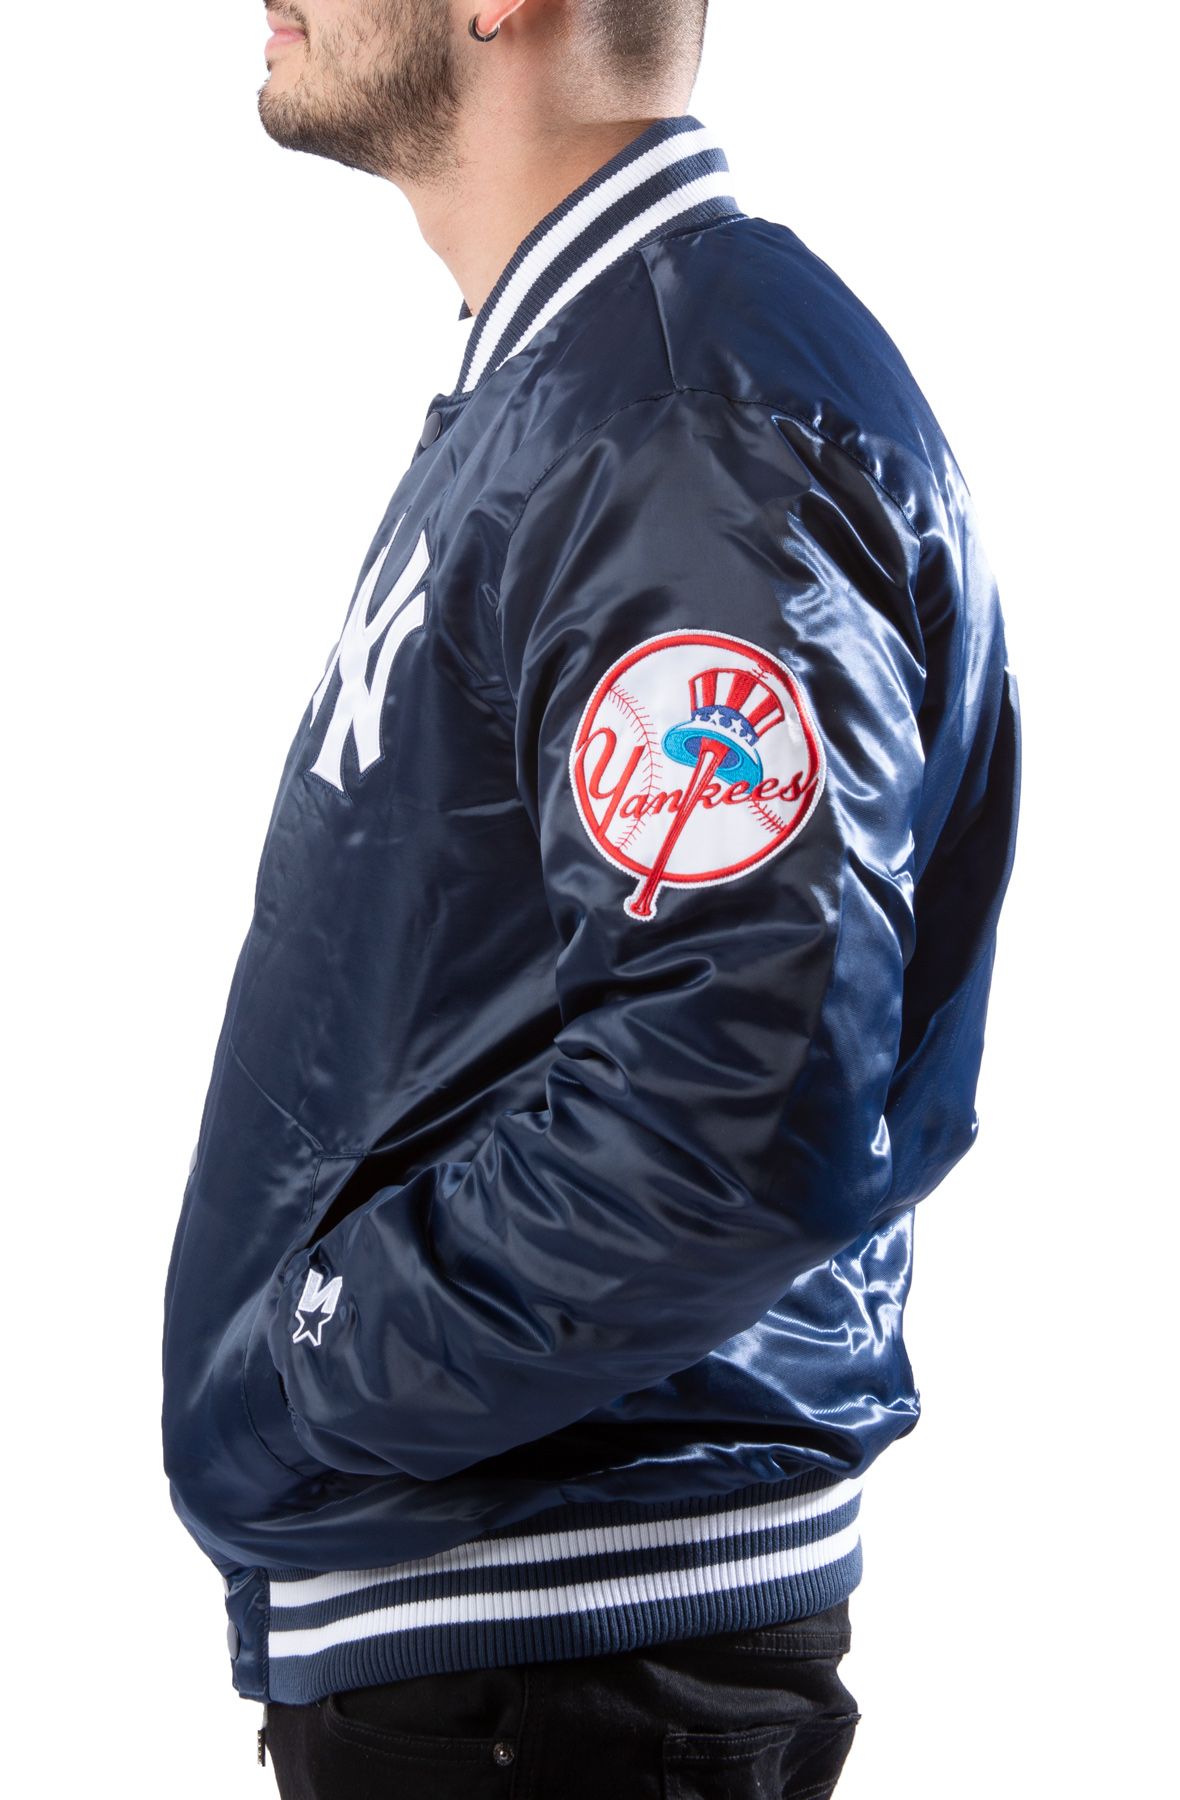 New York Yankees Jackets